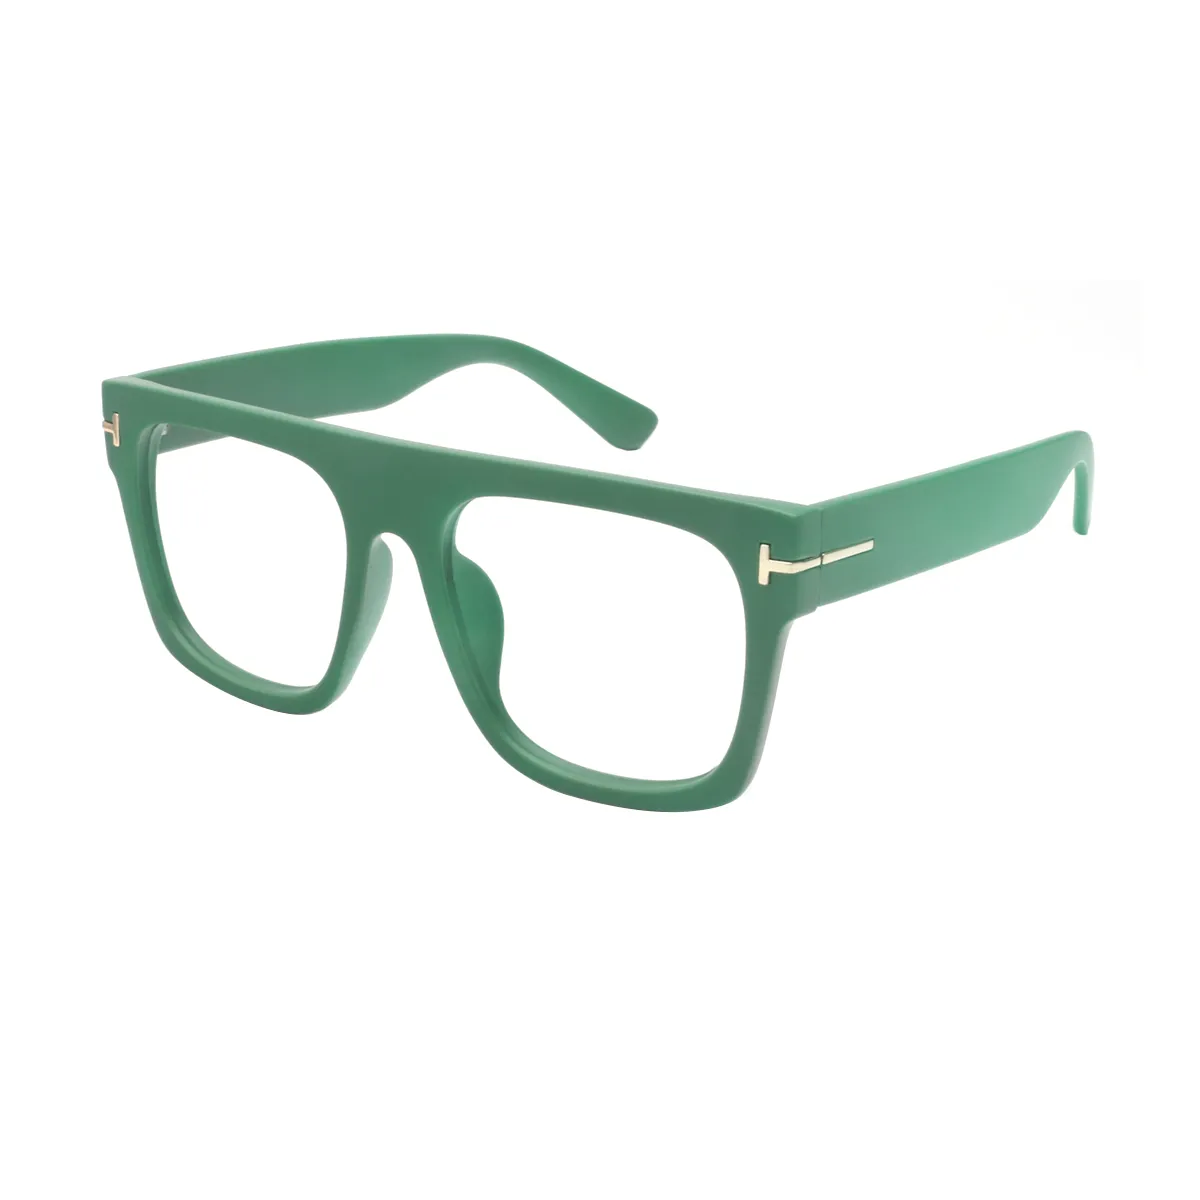 Fashion Square Green Glasses for Men & Women